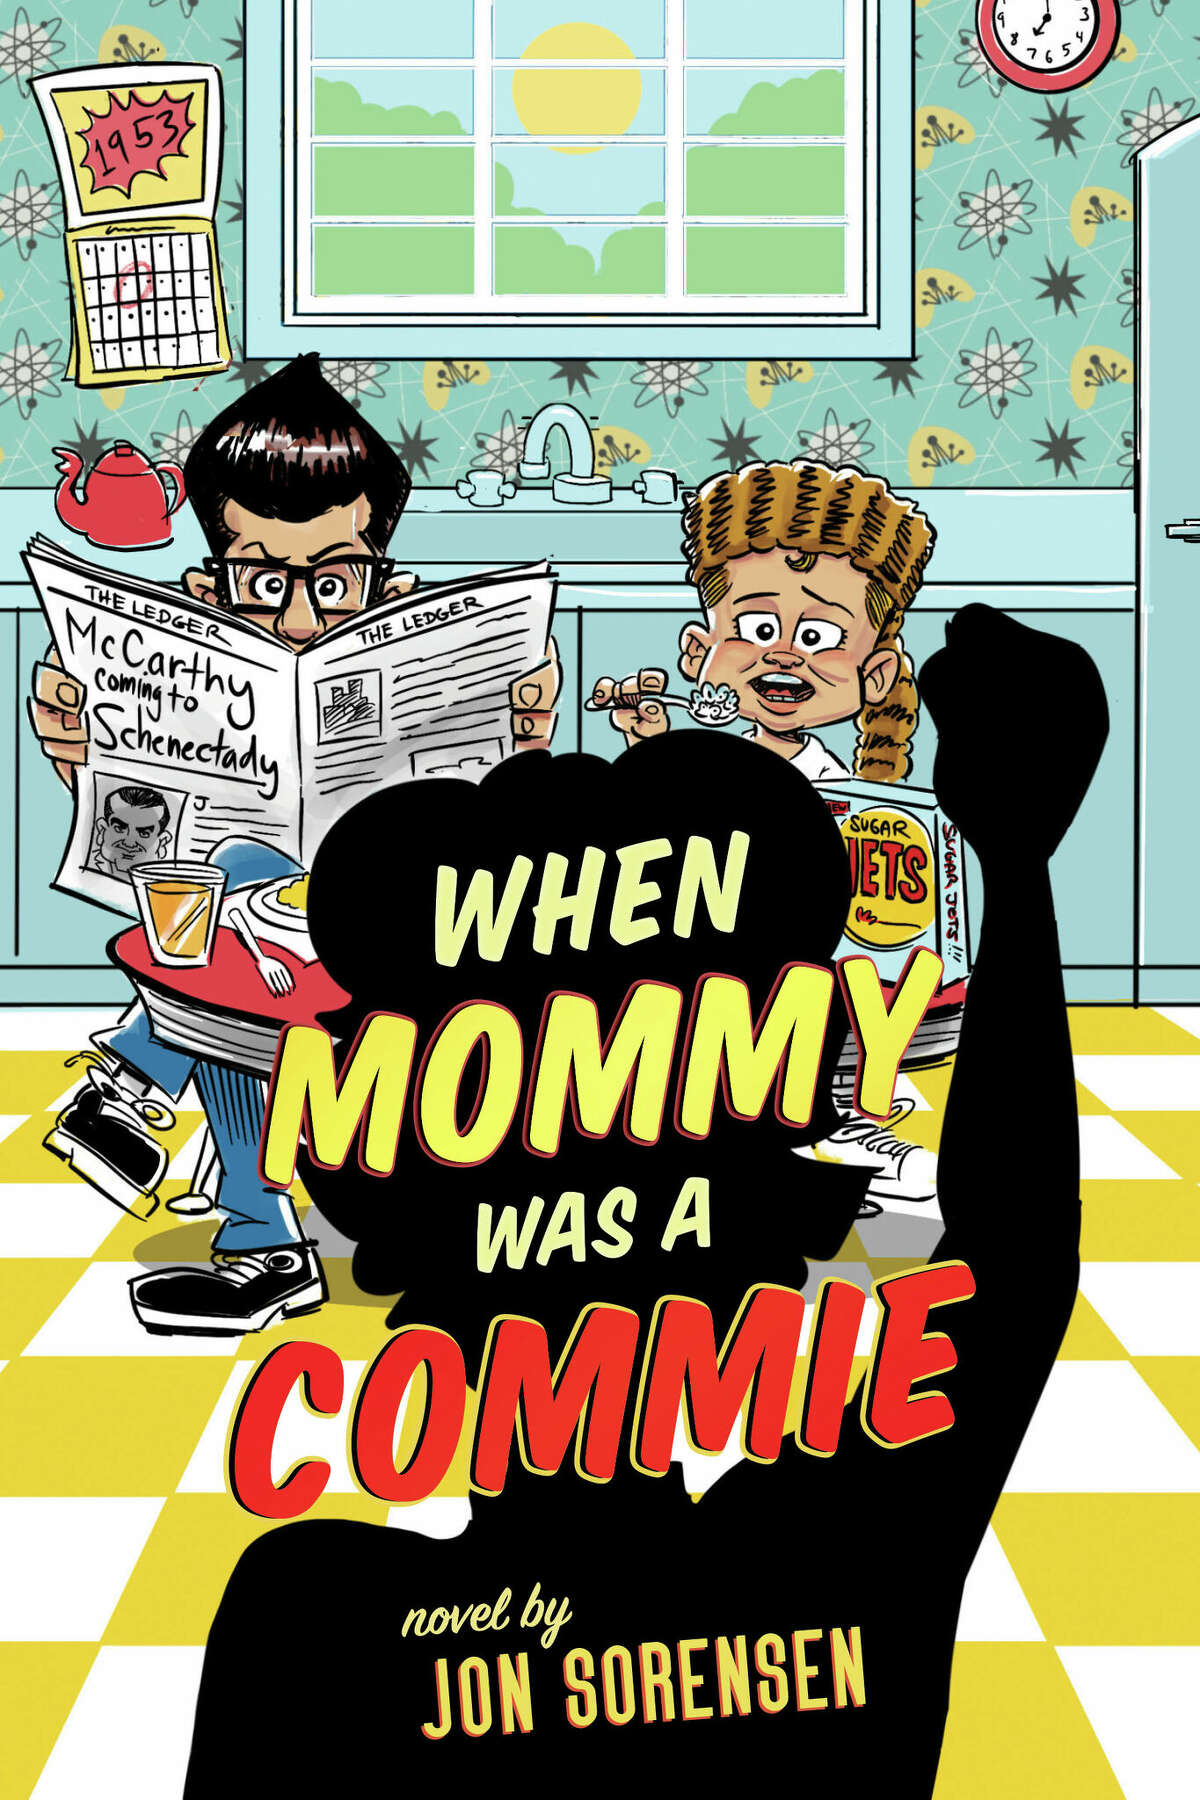 Jon Sorensen's "When Mommy was a Commie."